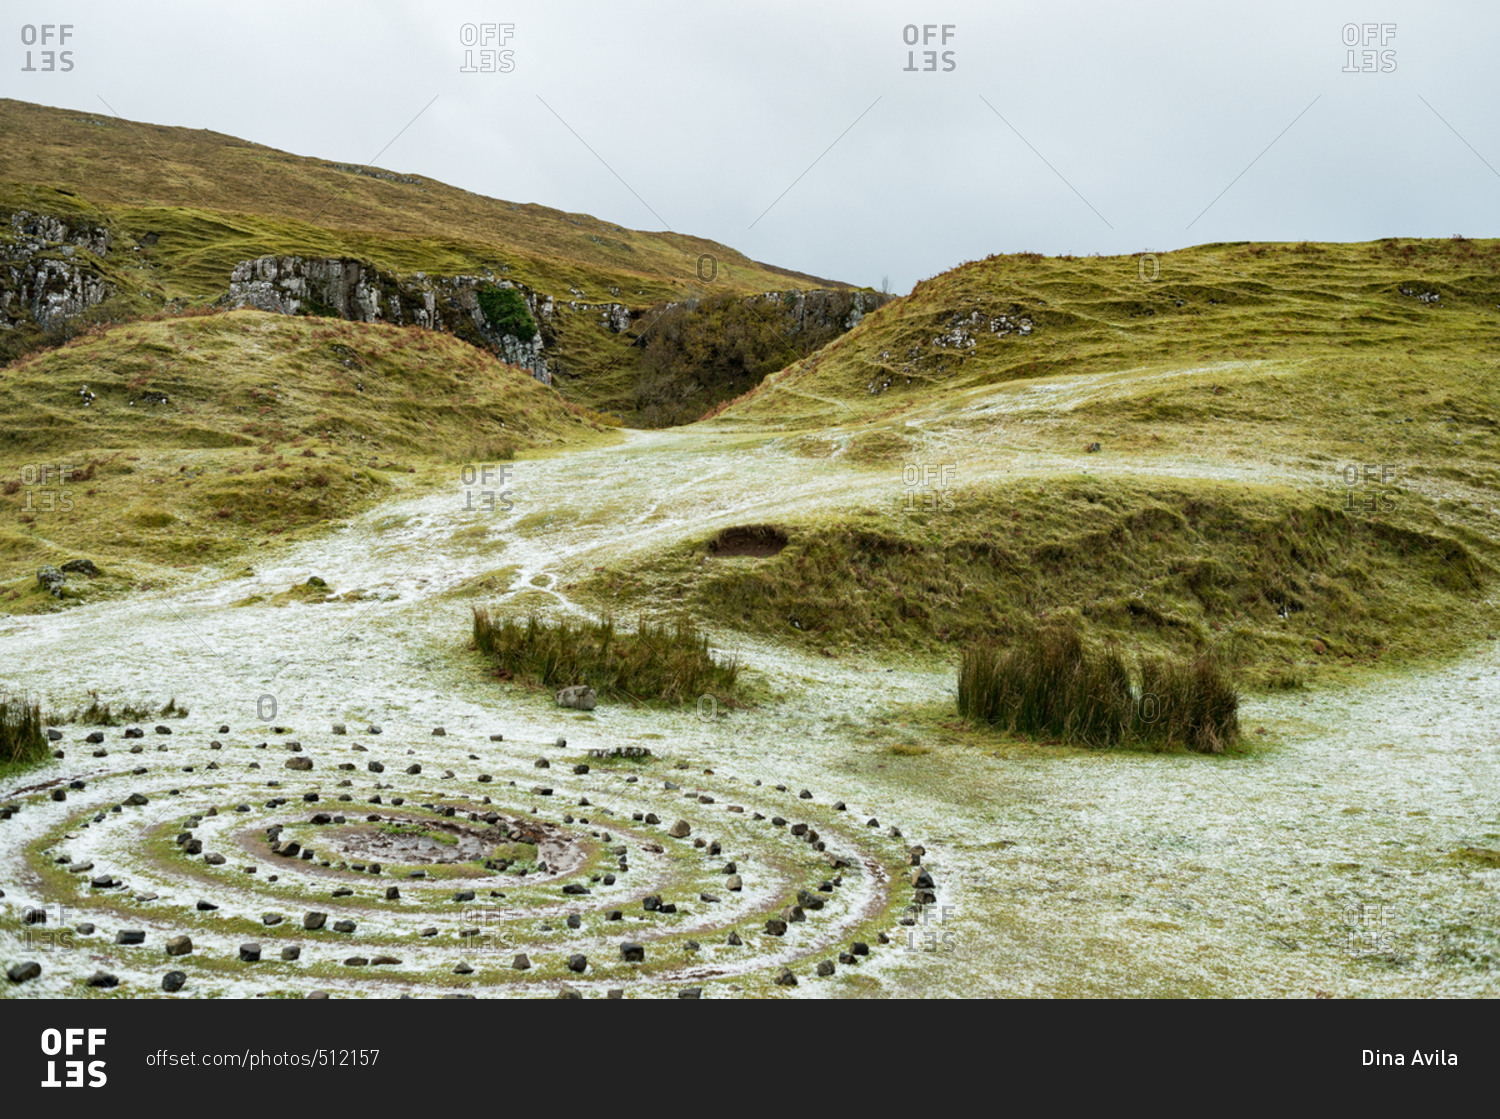 Spiral in grass at Faerie Glen, Isle of Skye, Scotland